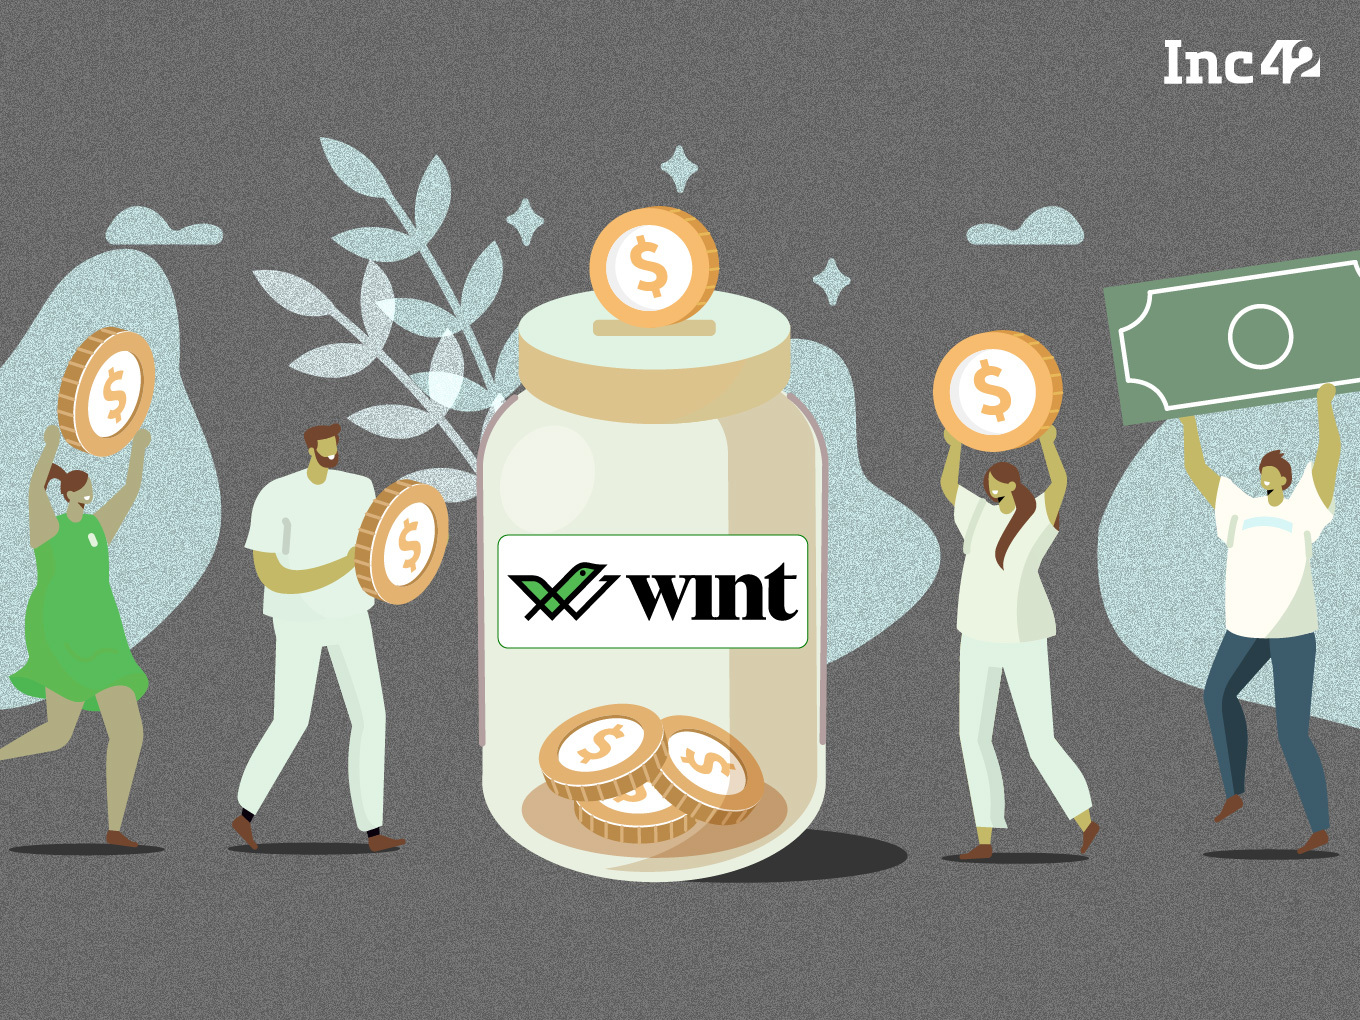 Exclusive: CA Rachna Ranade, Tanmay Bhatt, Ankur Warikoo & 12 Others Invest In Wint Wealth